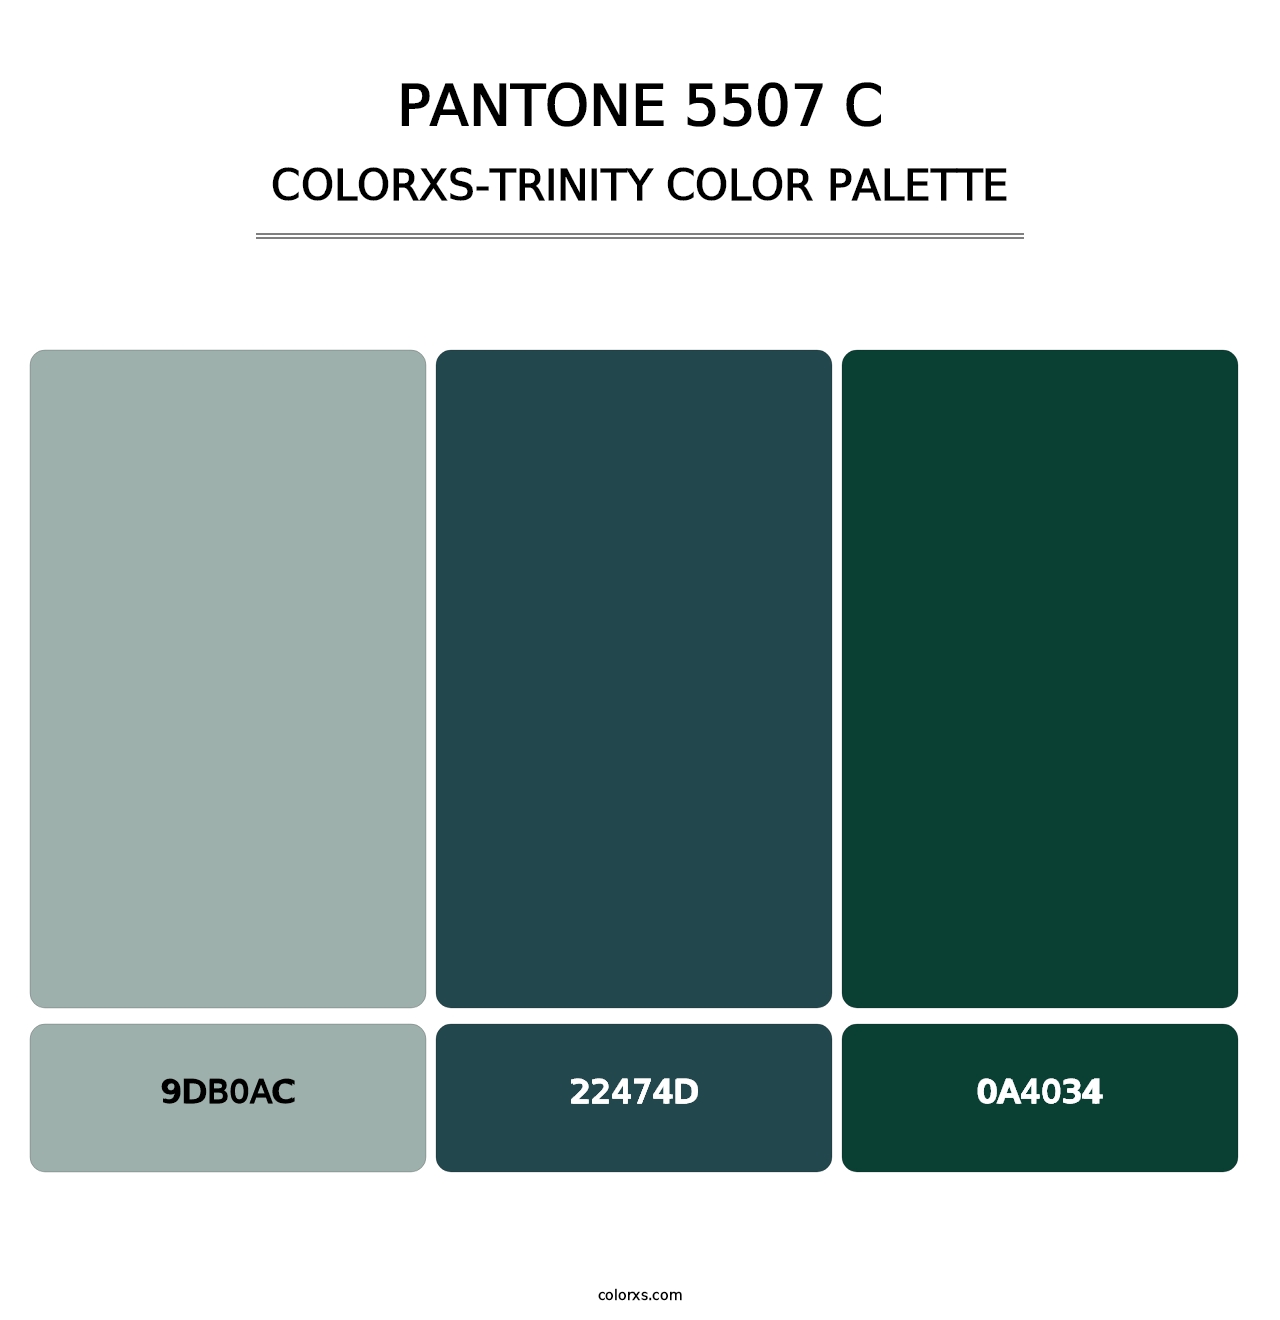 PANTONE 5507 C - Colorxs Trinity Palette